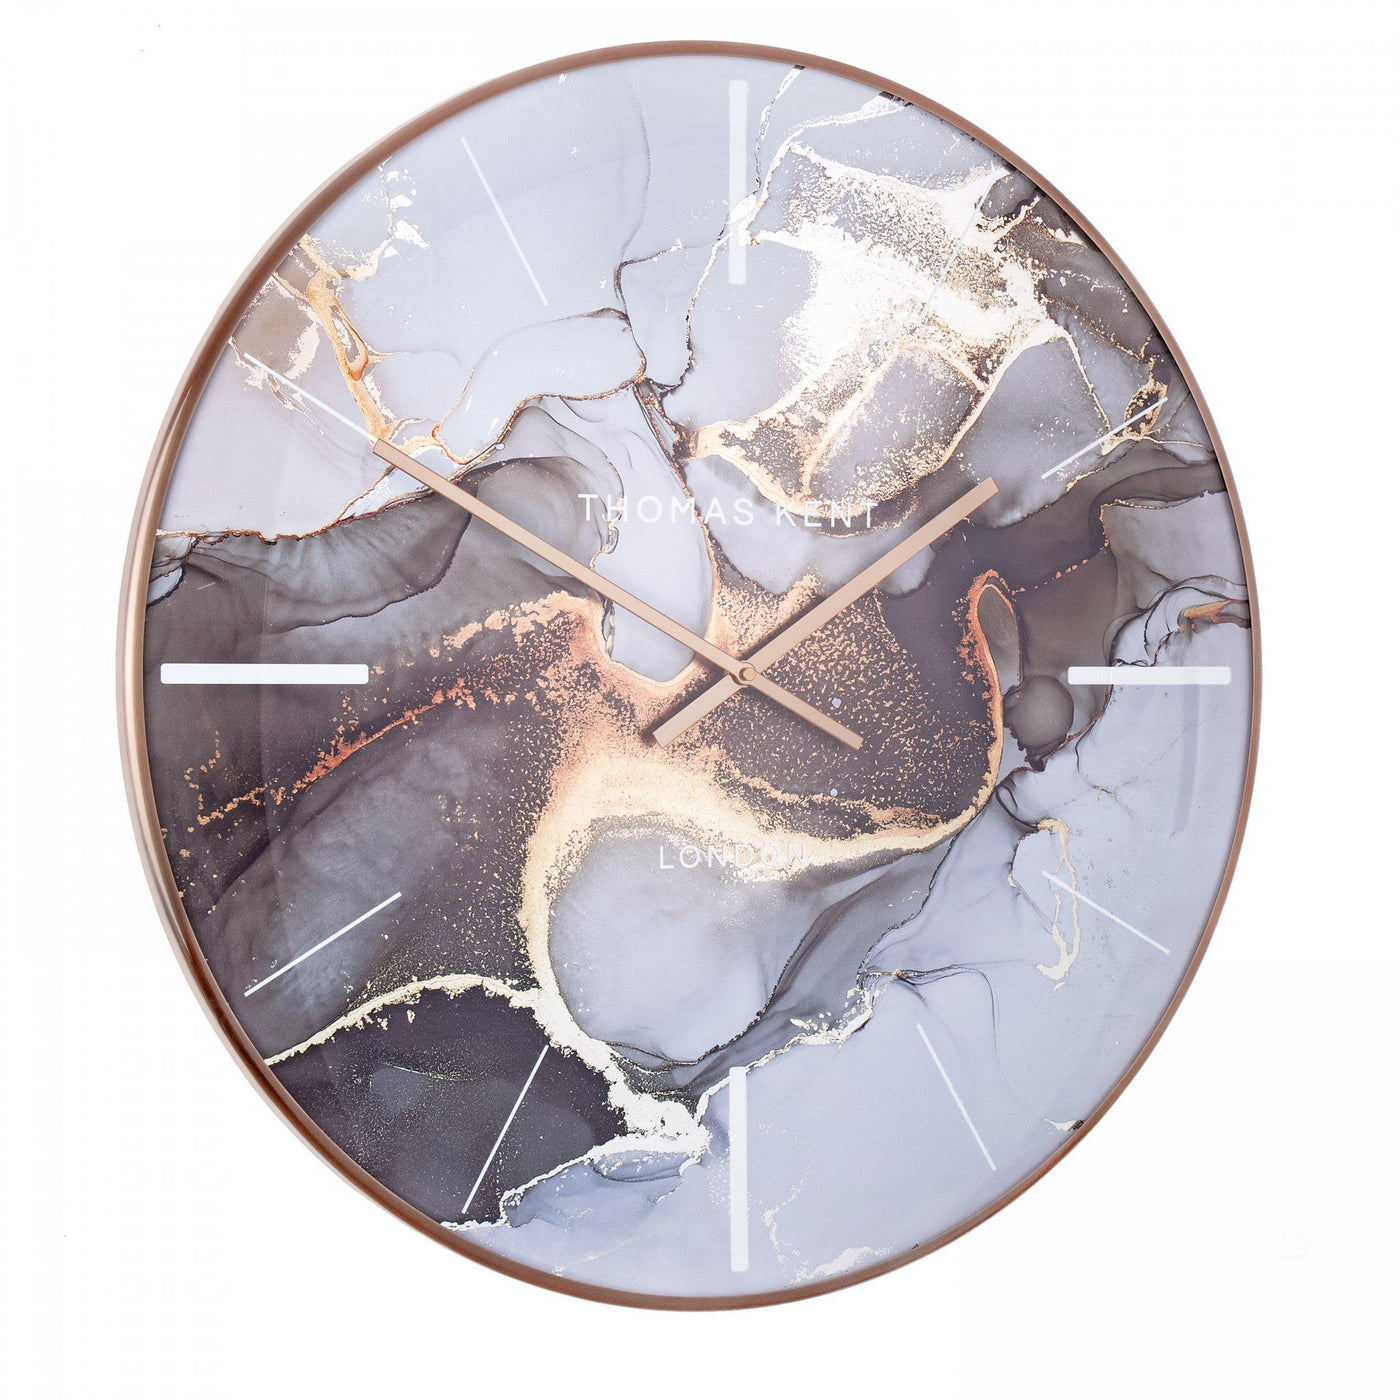 Thomas Kent London. Oyster Grand Wall Clock Copper 26" (66cm) - timeframedclocks